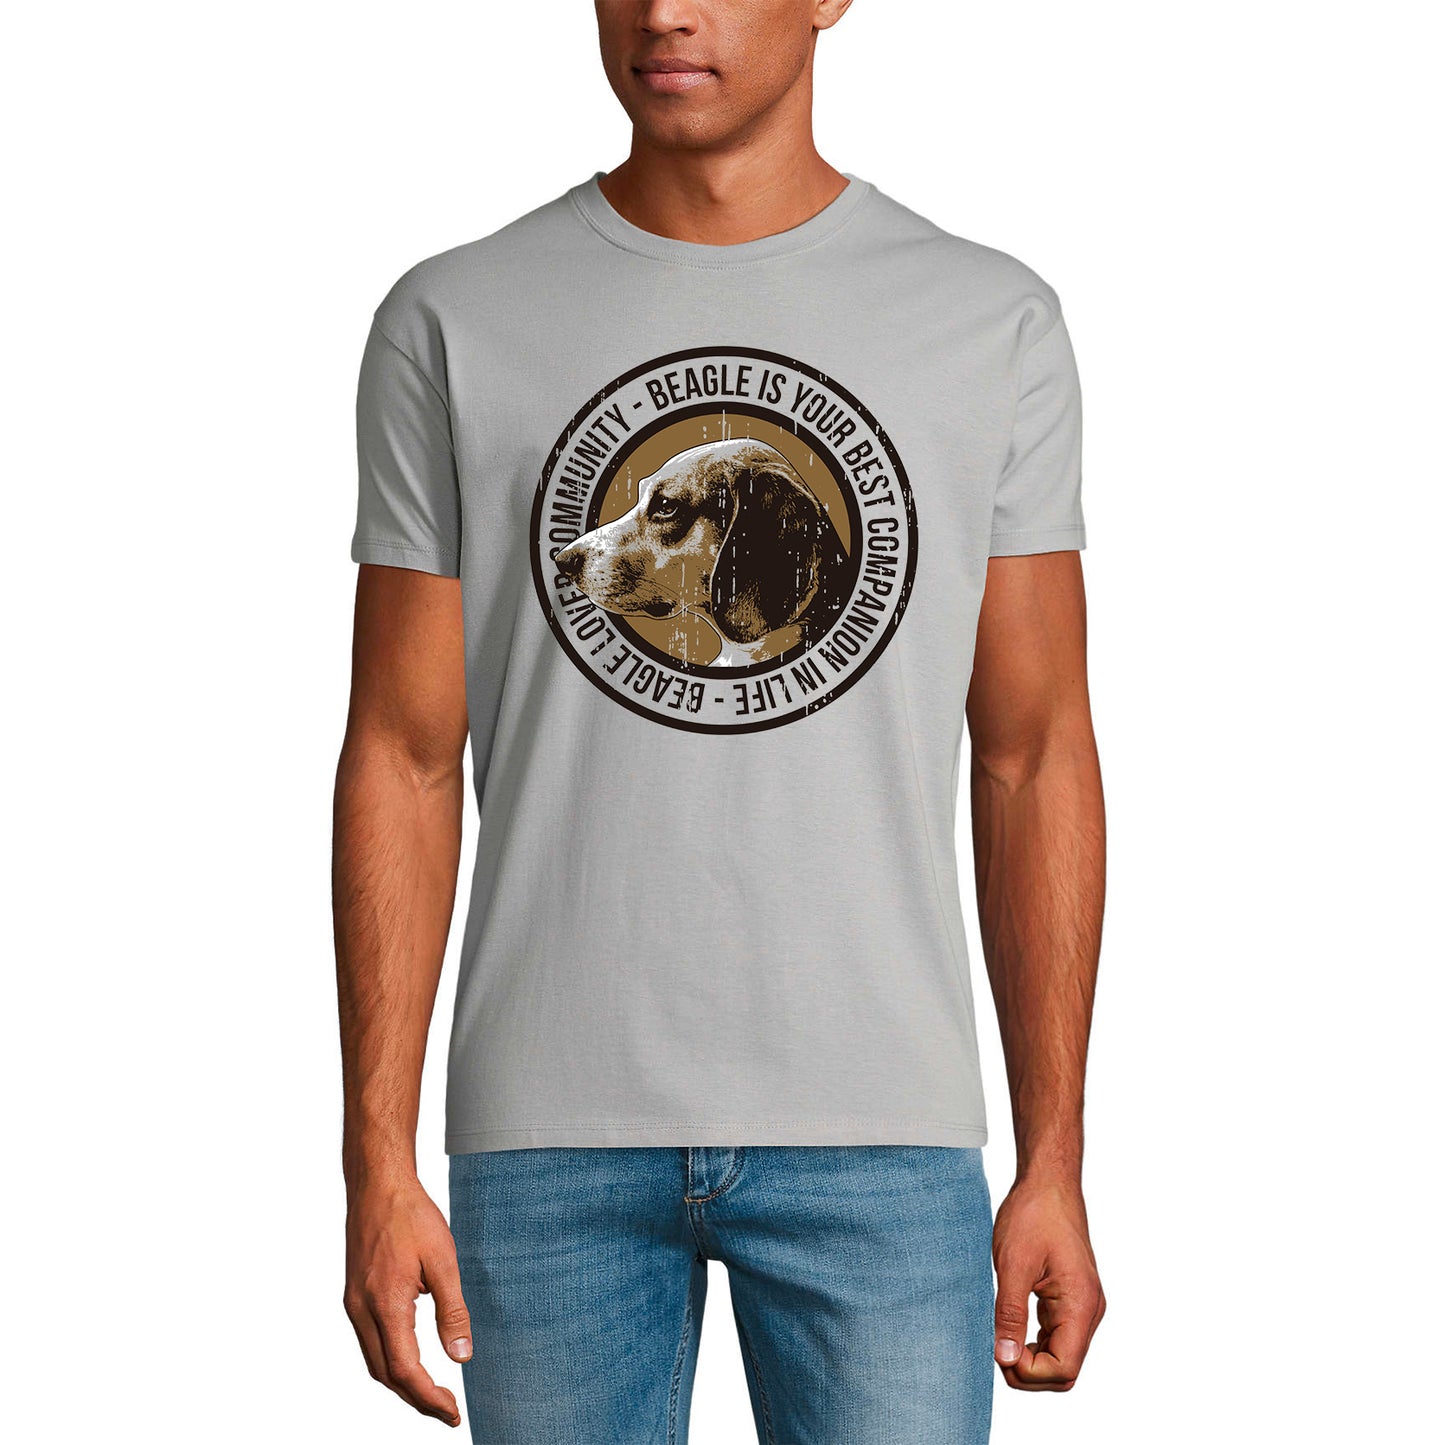 ULTRABASIC Men's T-Shirt Beagle is Your Best Companion Life - Dog Best Friend Shirt